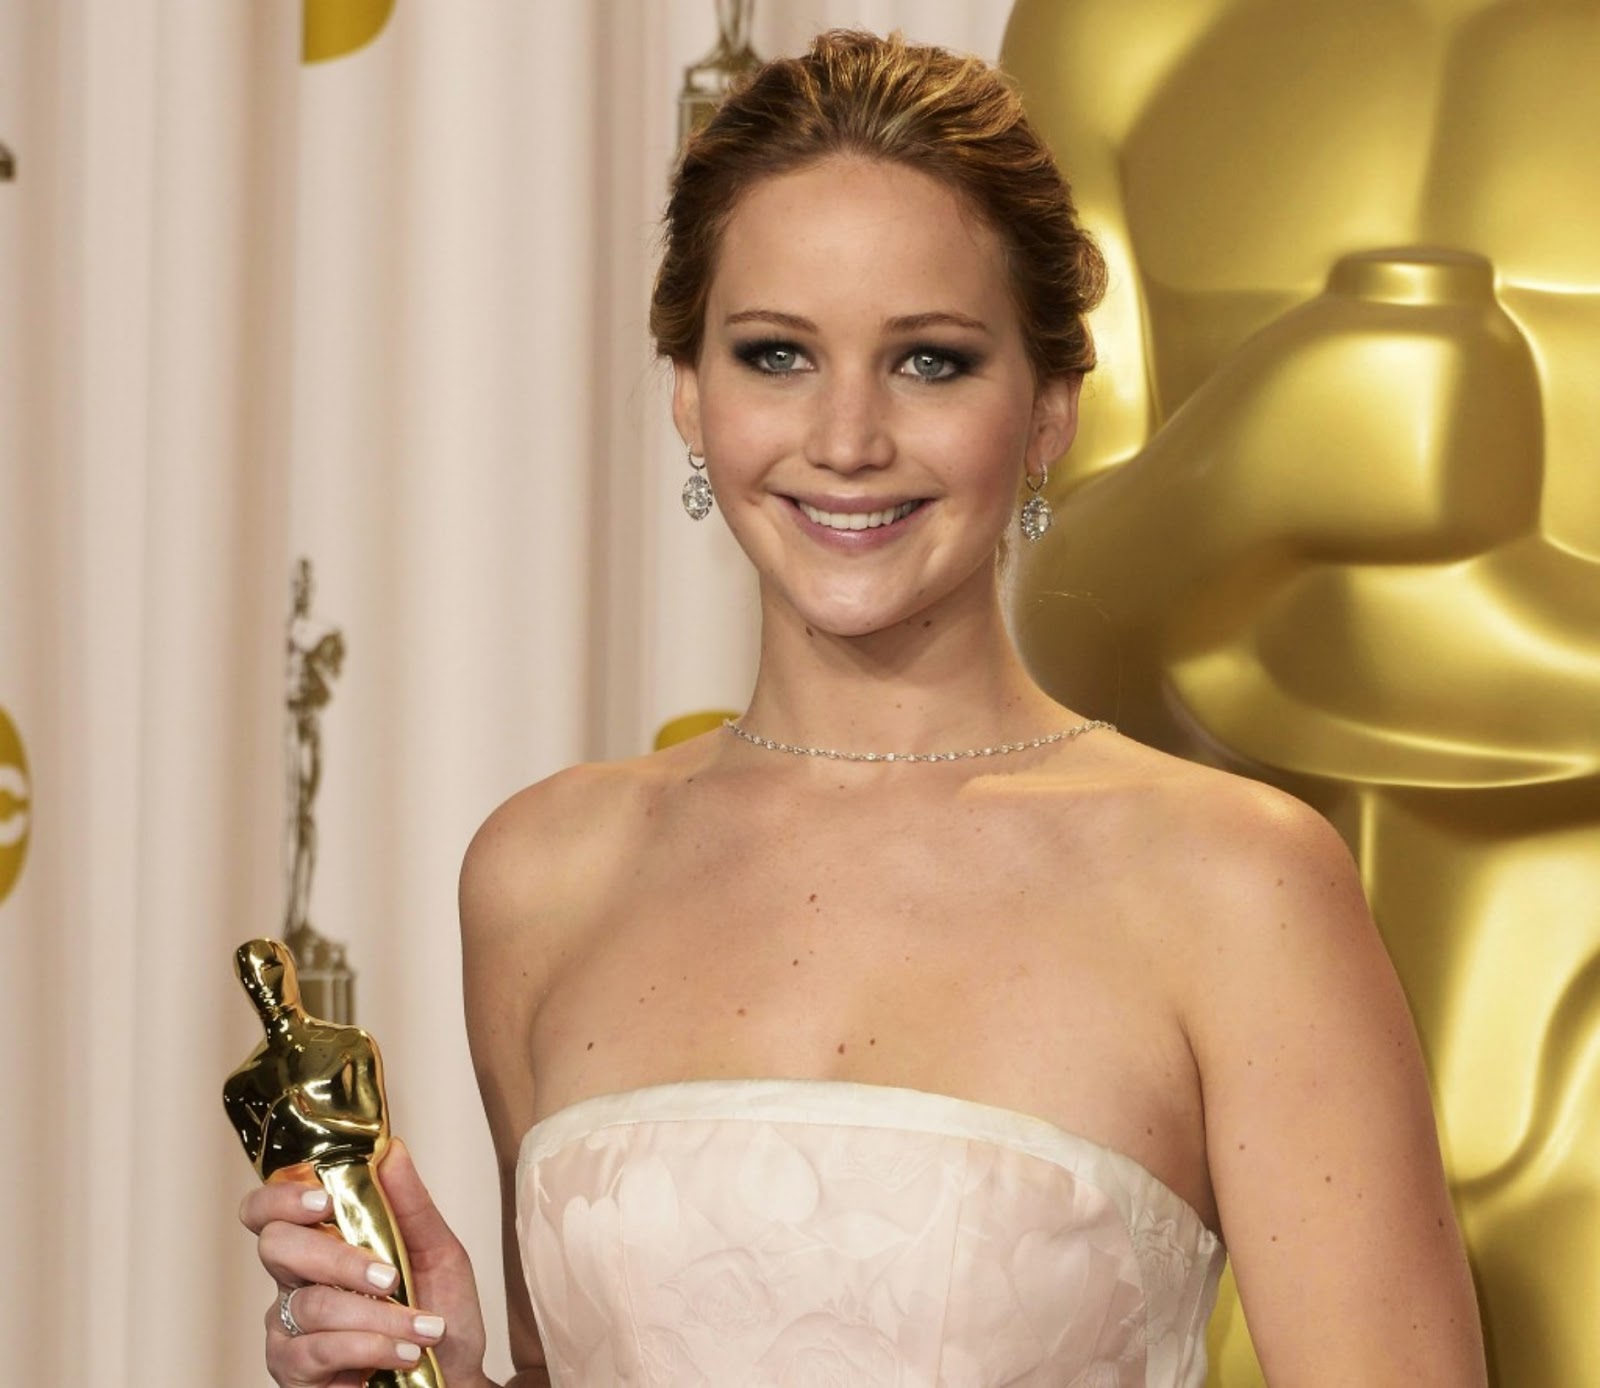 http://3.bp.blogspot.com/-OaktOHZSuHE/UStvnWt2HcI/AAAAAAAAHOw/QV81FXlTlkE/s1600/Jennifer-Lawrence-Holding-Oscar-Award-2013-HD-Wallpaper-Vvallpaper.Net.jpg